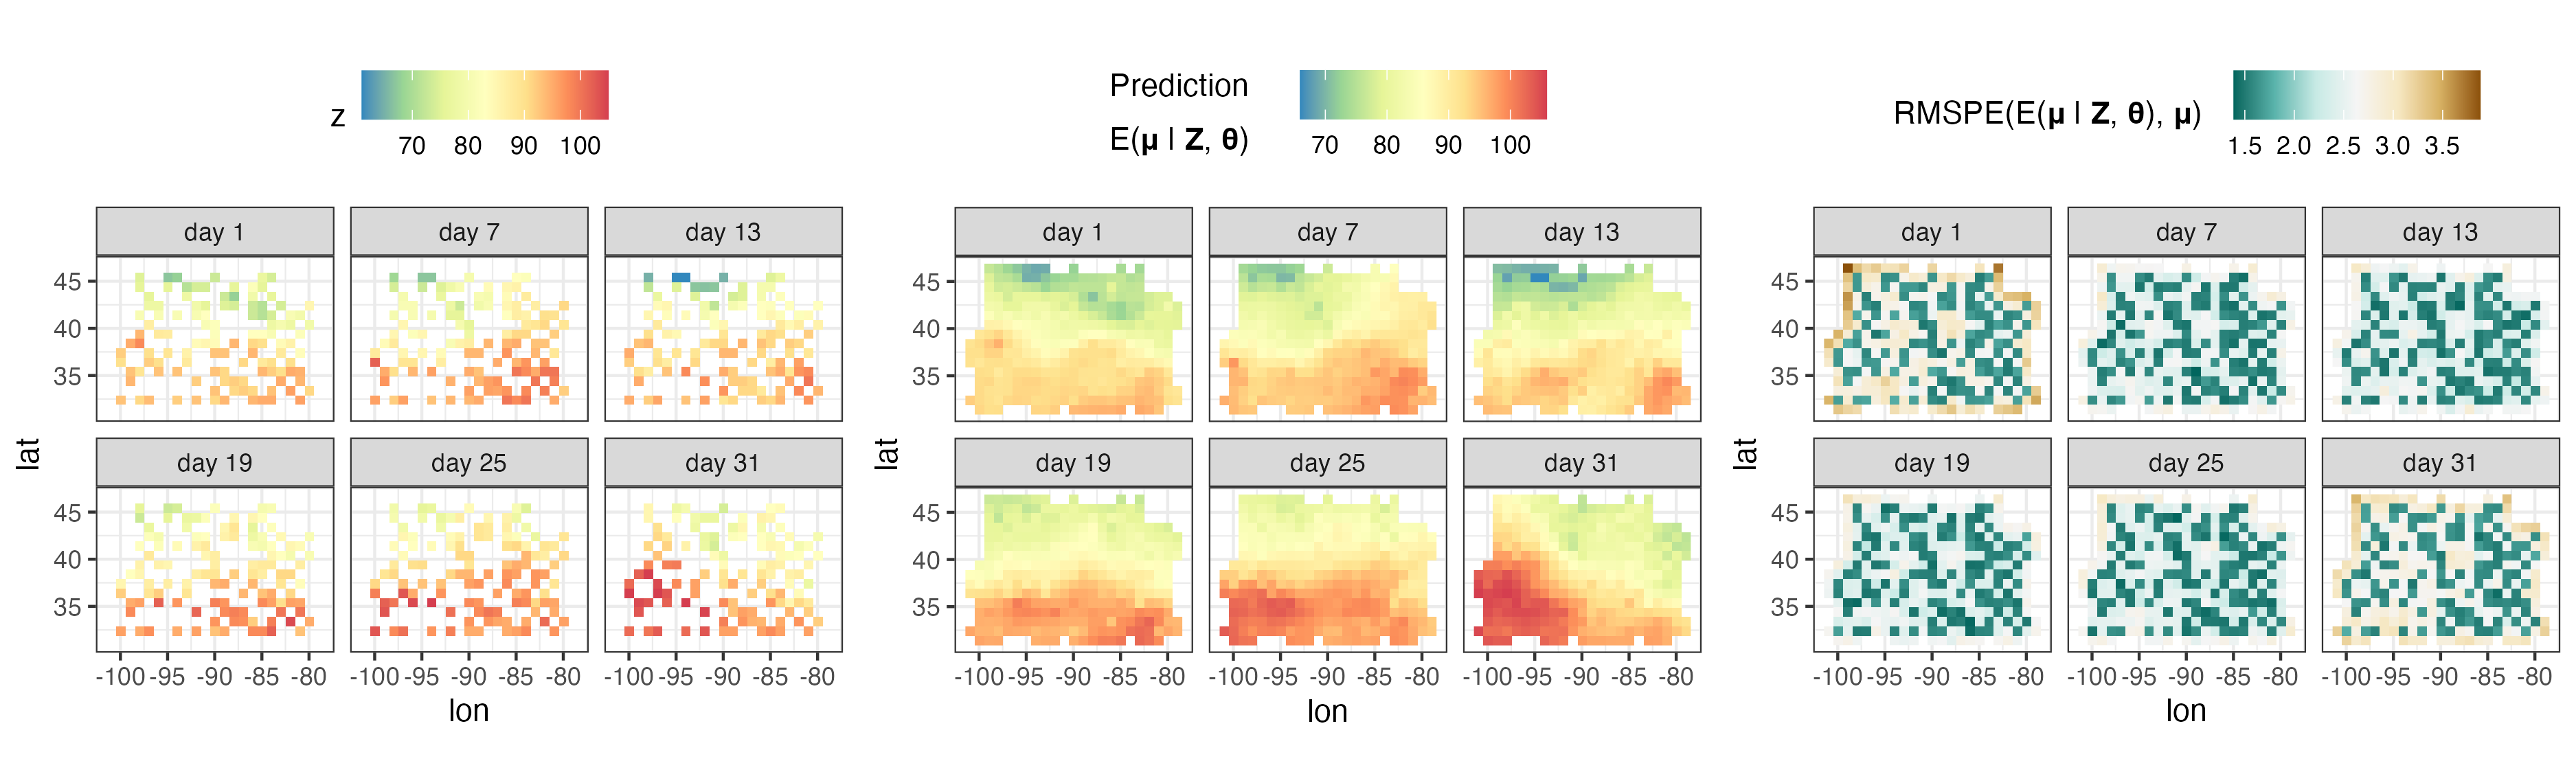 (Left) Prediction of spatio-temporal process. (Right) Prediction interval width.